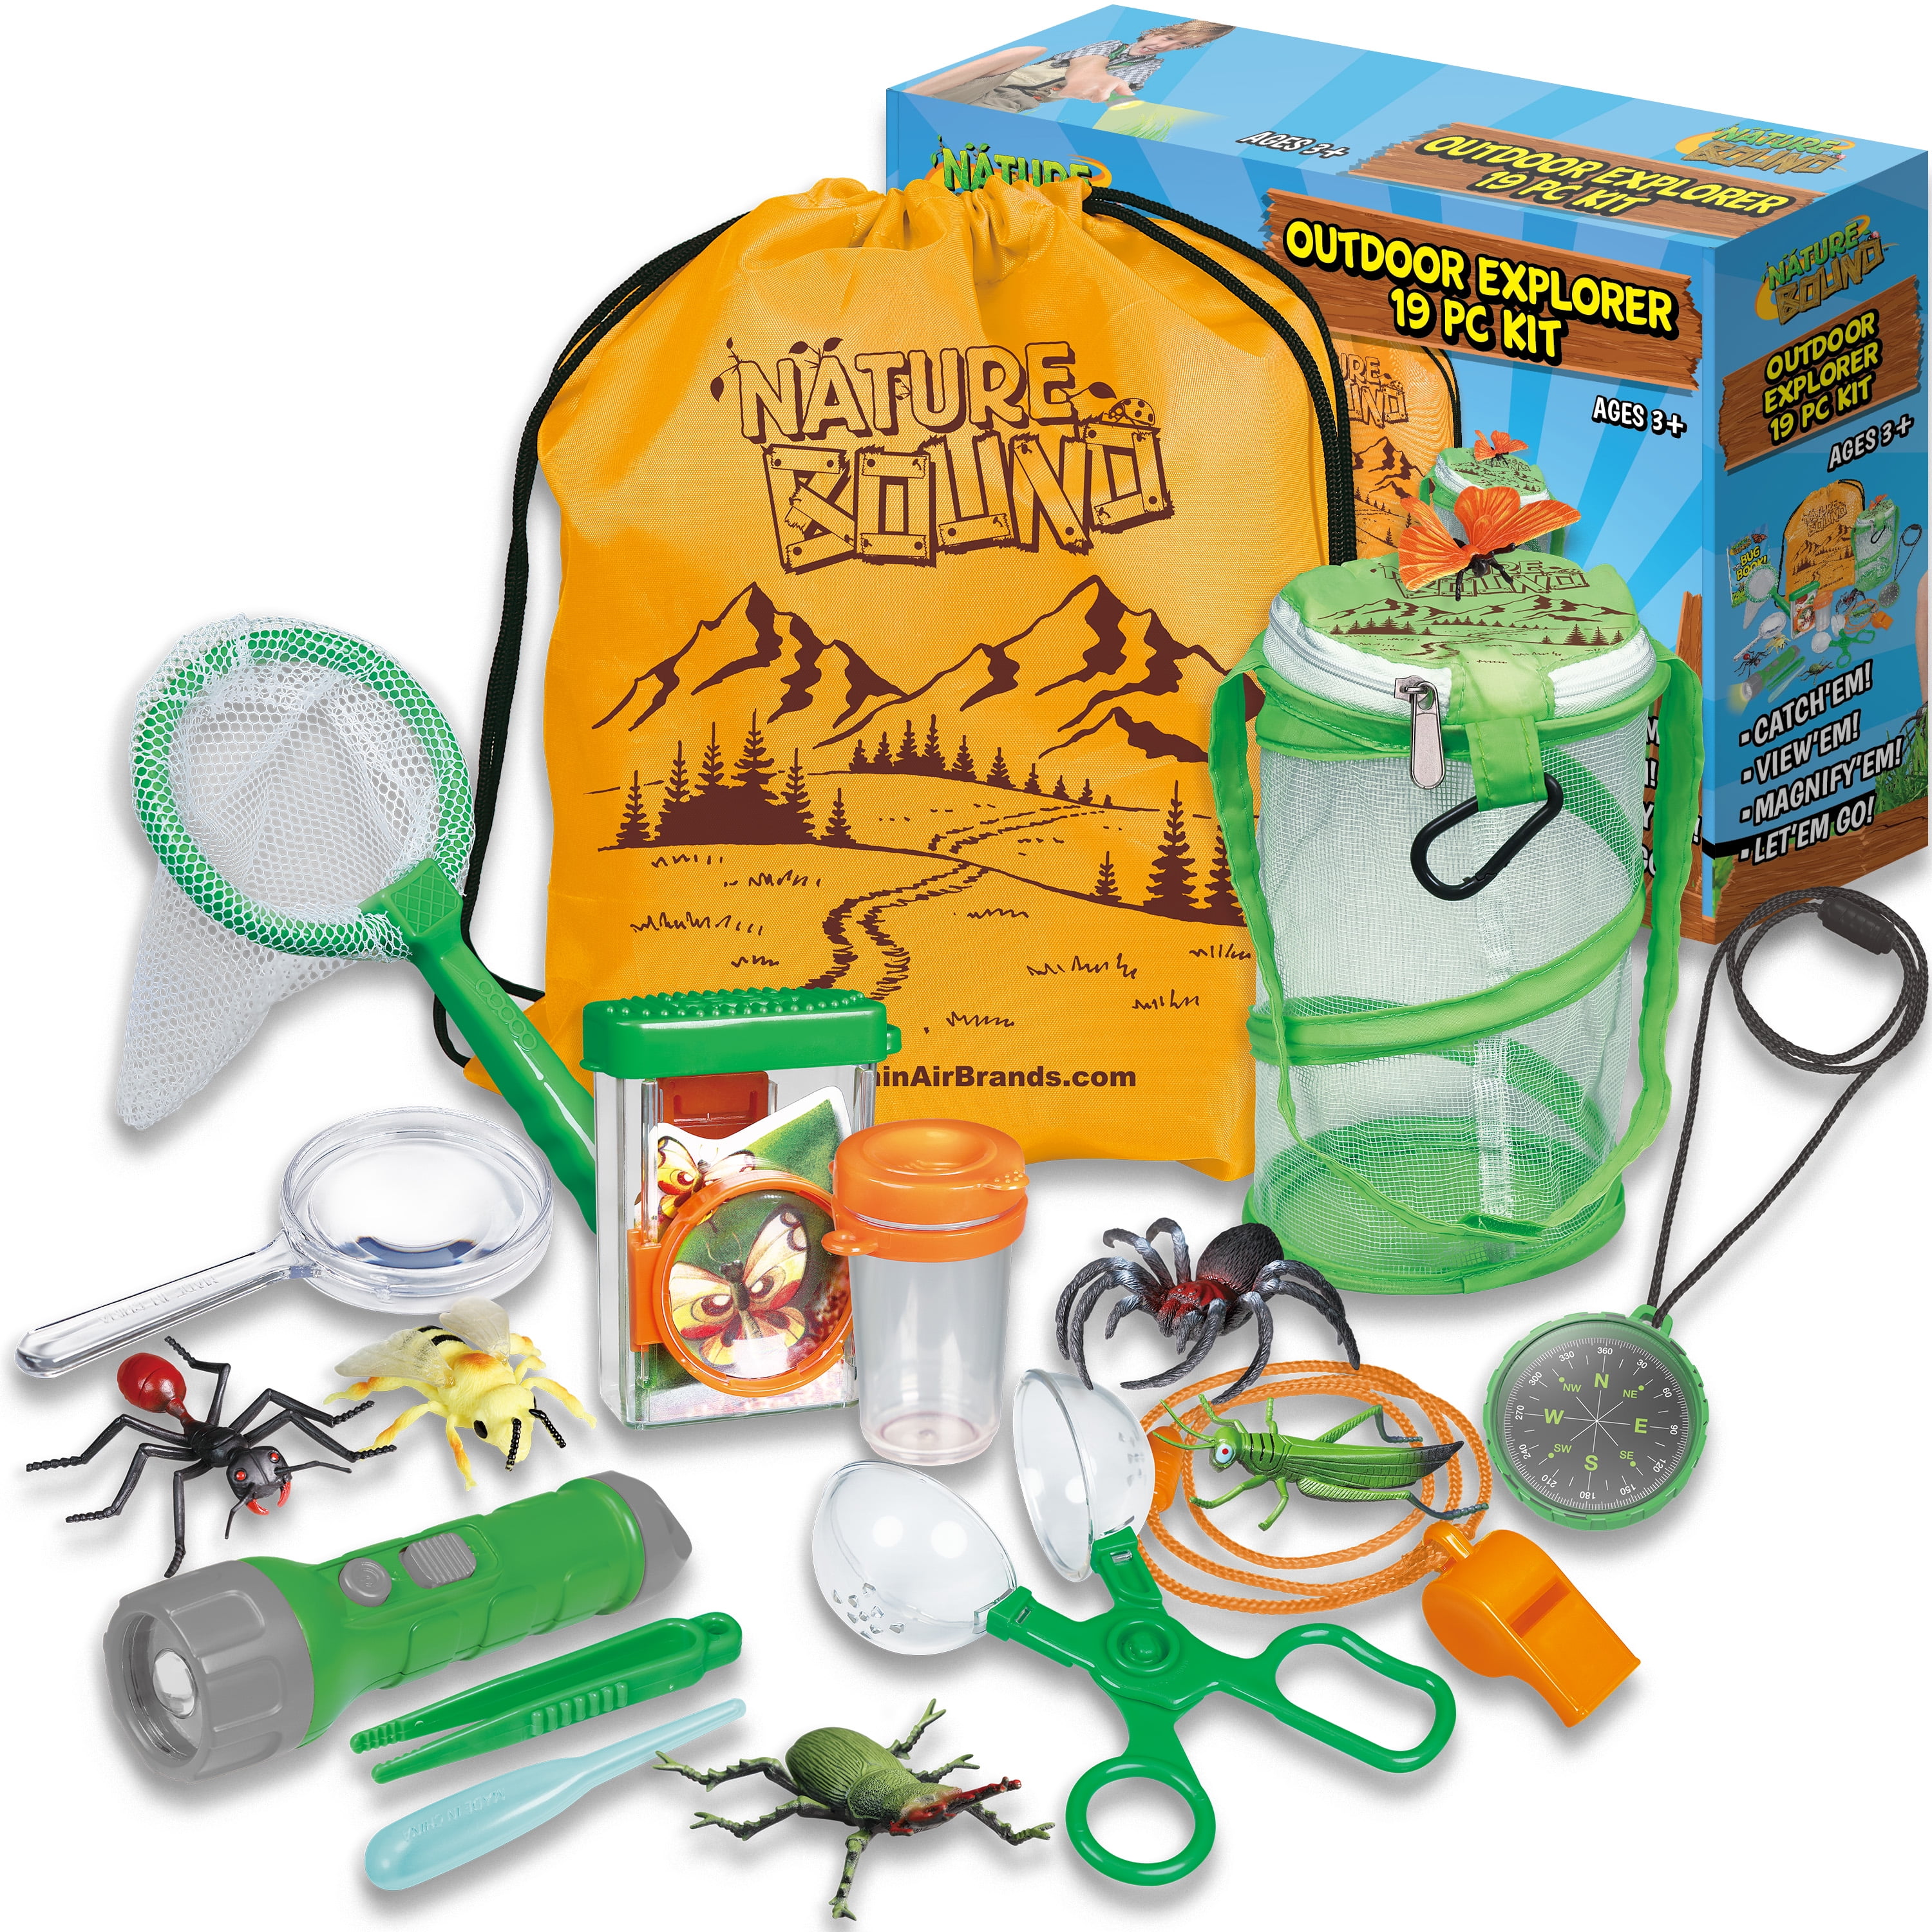 Beetle Container Joyjoz Outdoor Explorer Set for Children Nature Explorer Kit 